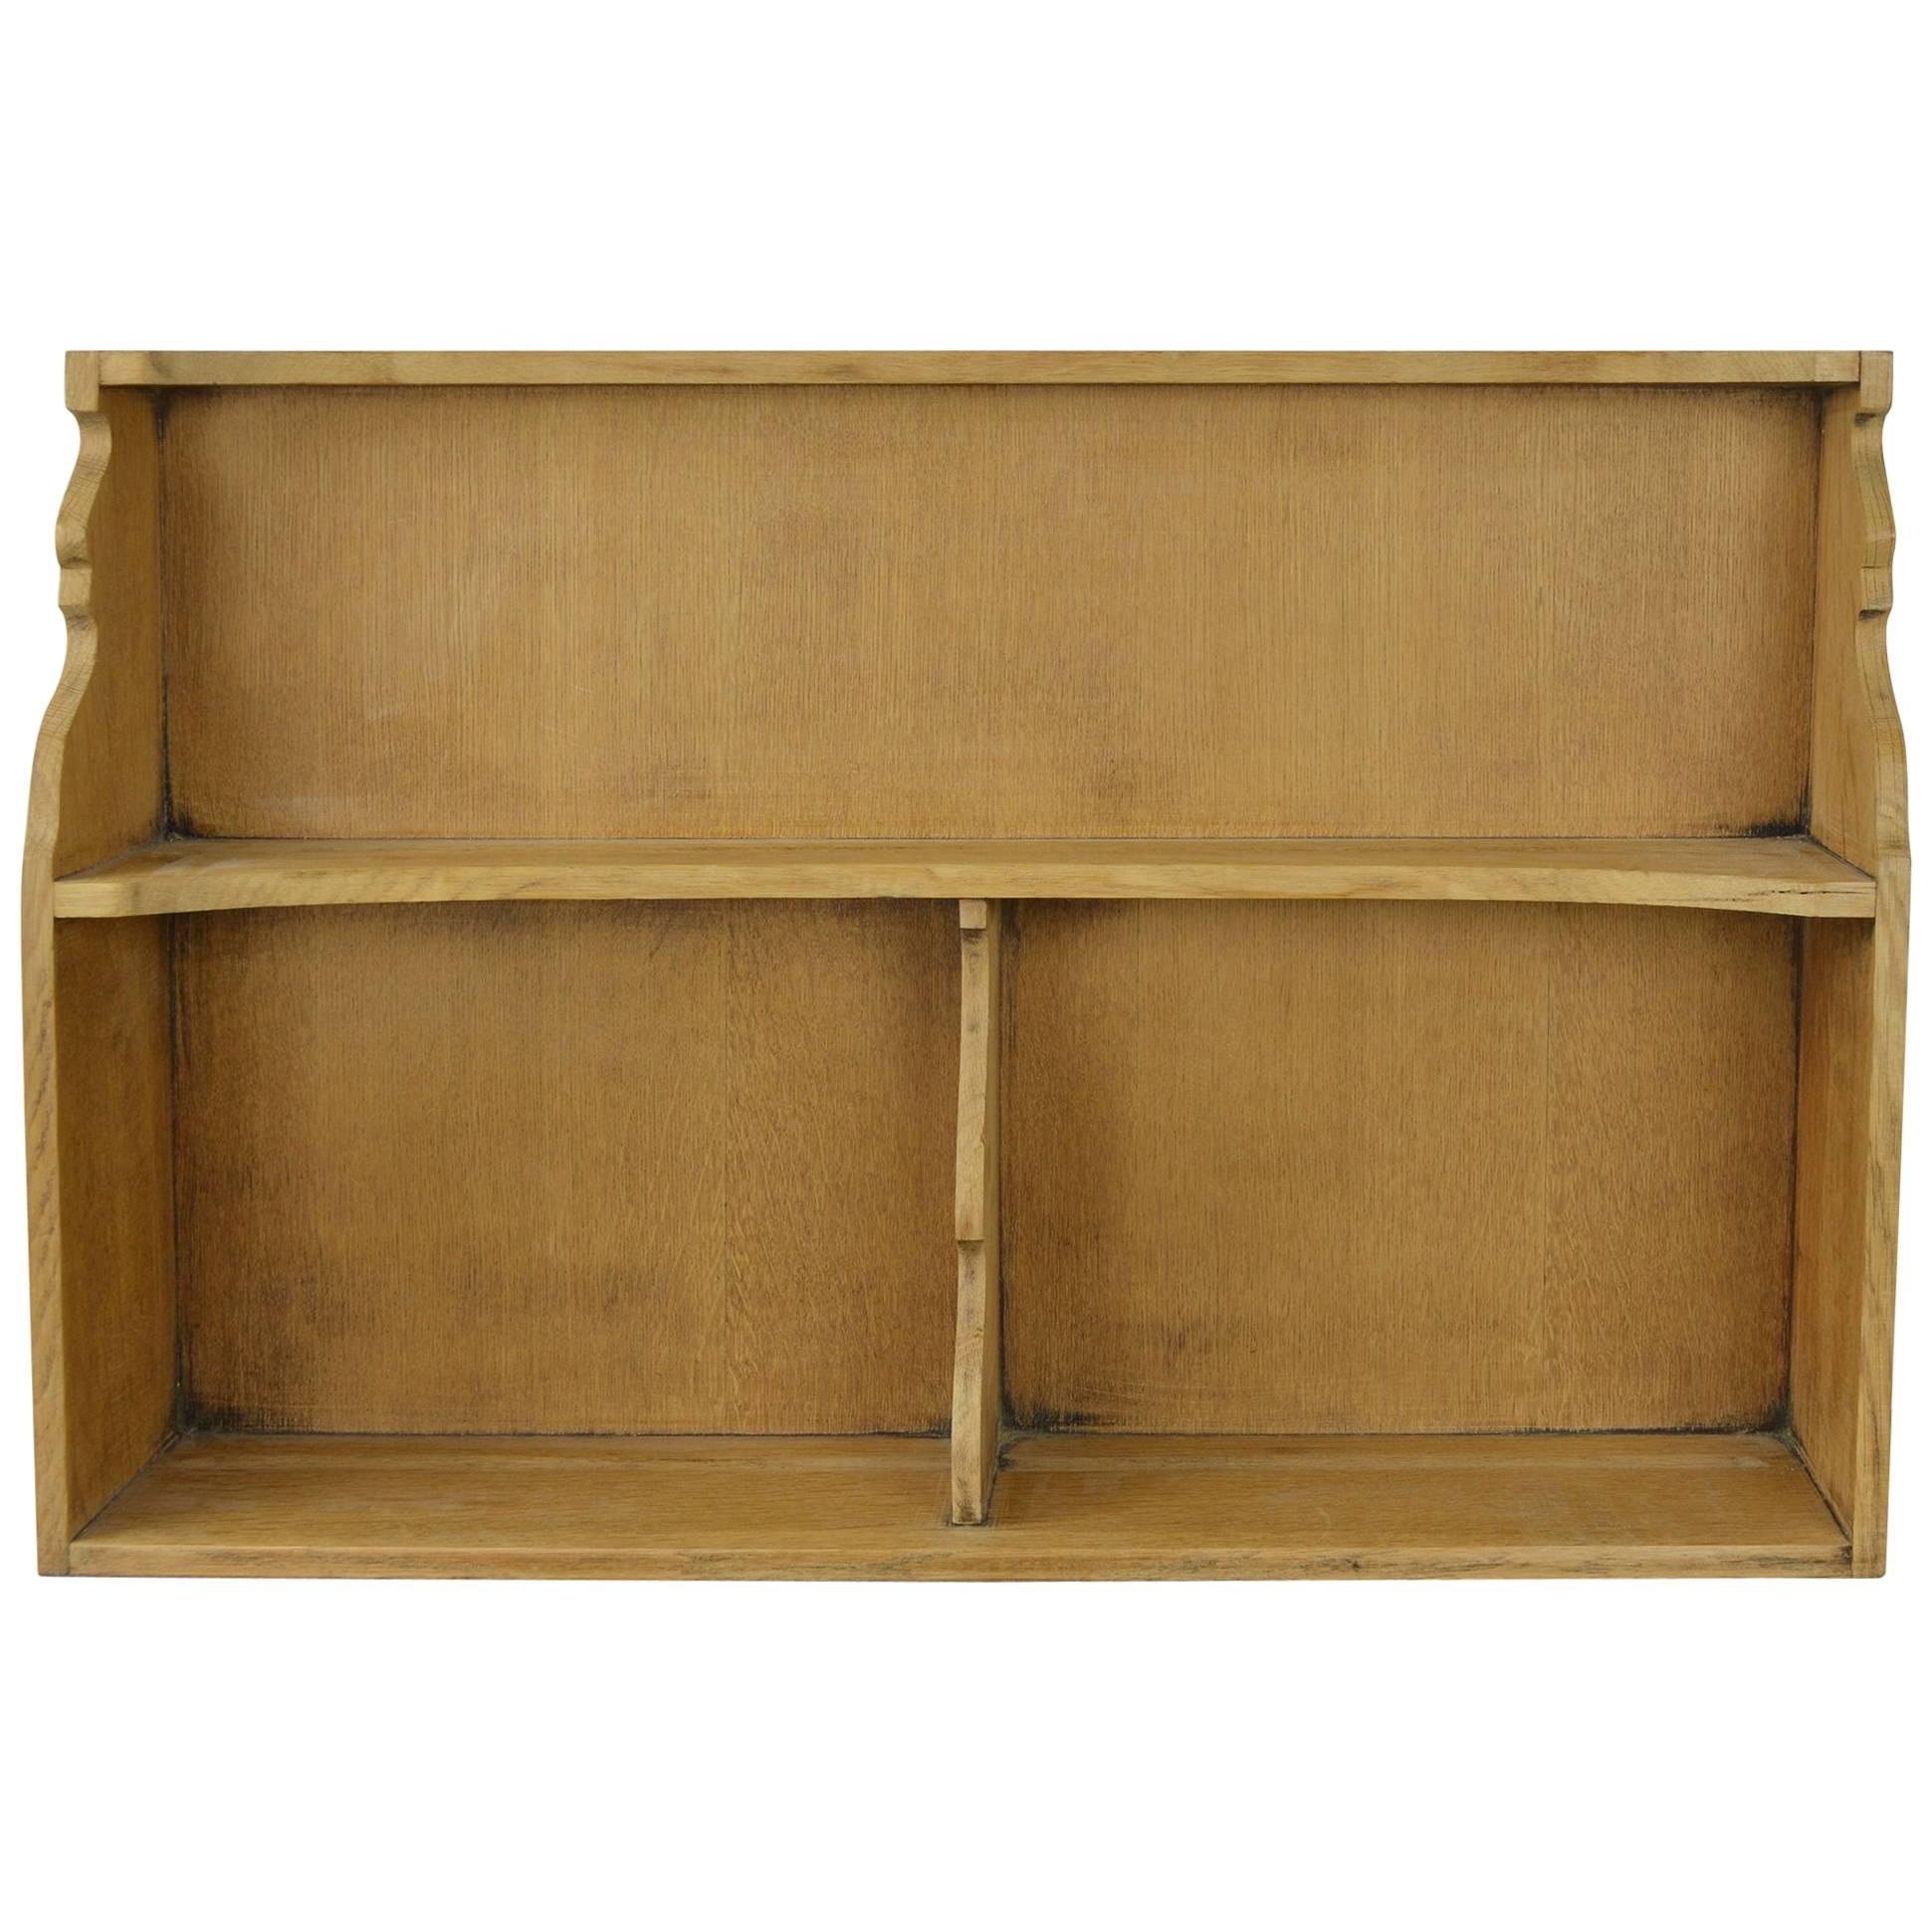 Vintage Oak Wall Cabinet, English, Midcentury